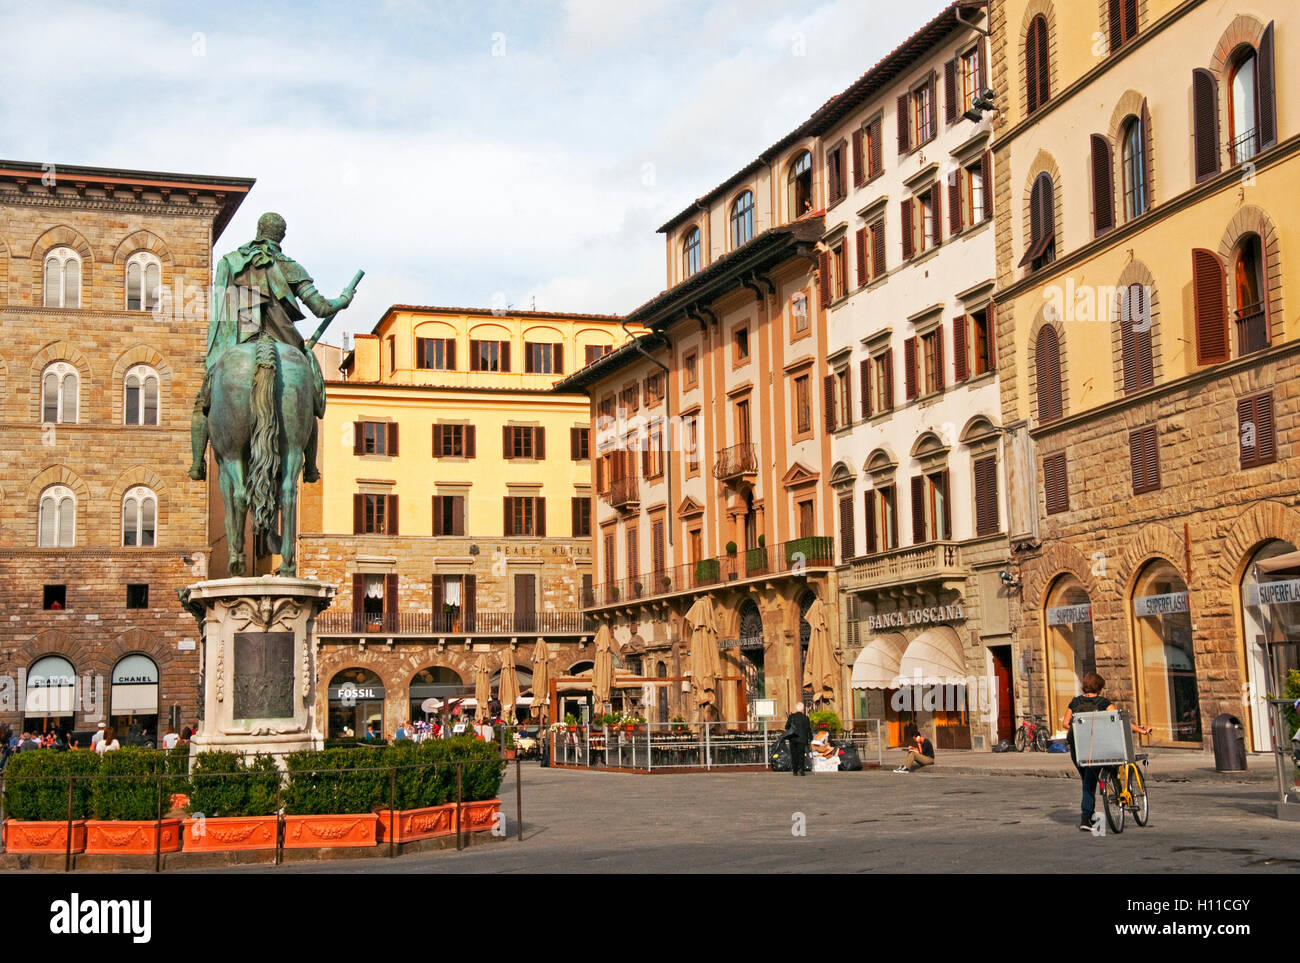 Piazza Signoria, Florence, Italie Banque D'Images